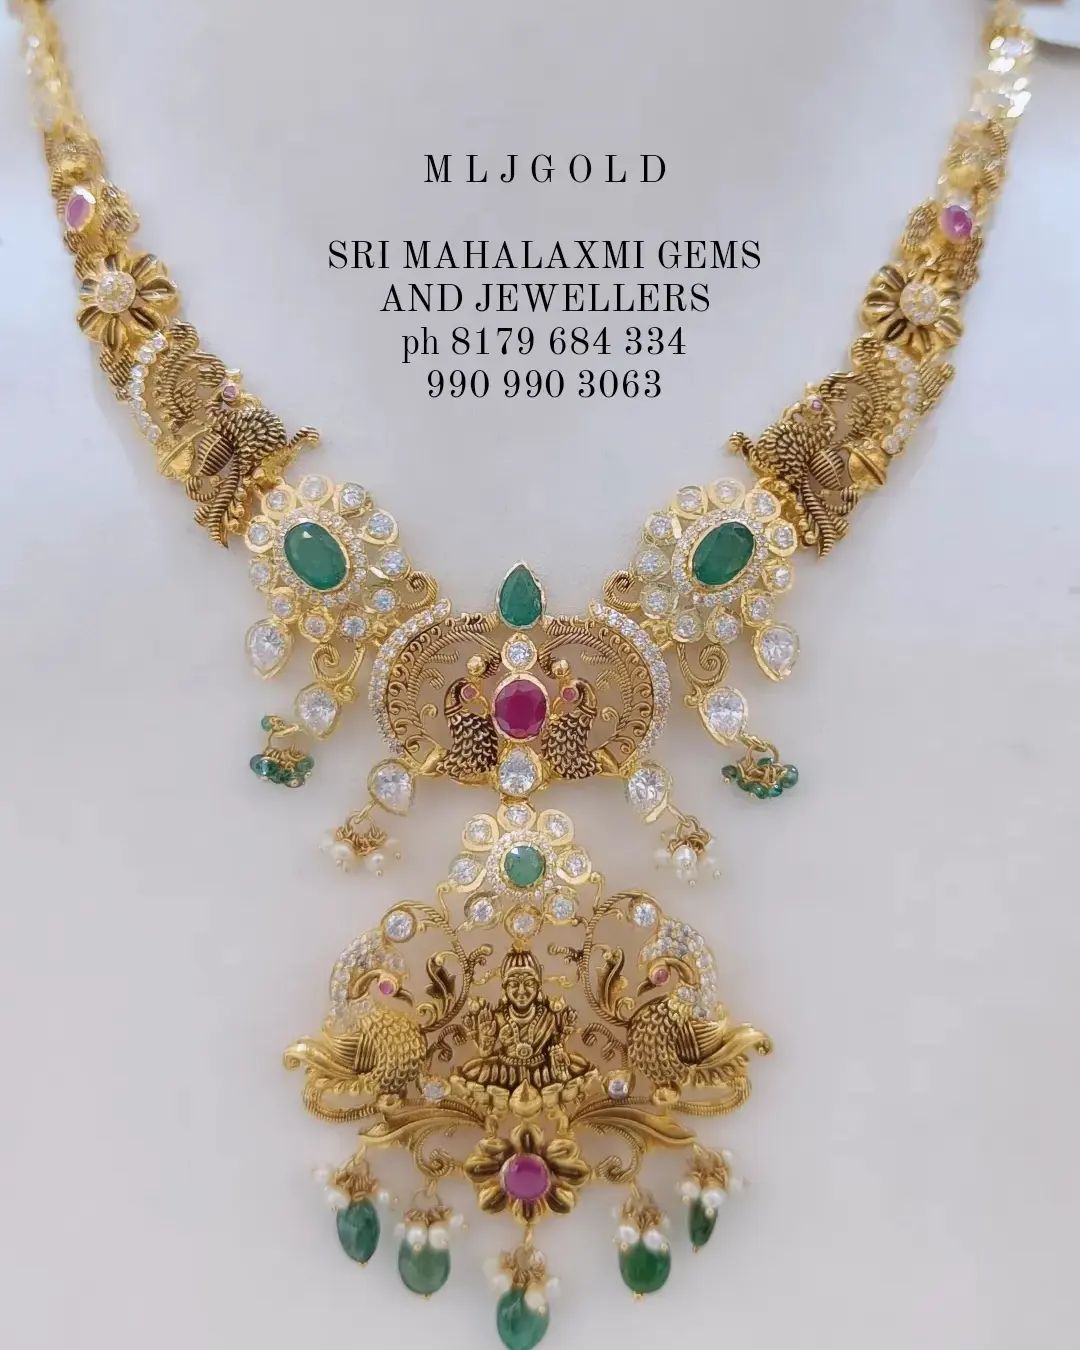 Sri mahalaxmi gems and jewellers